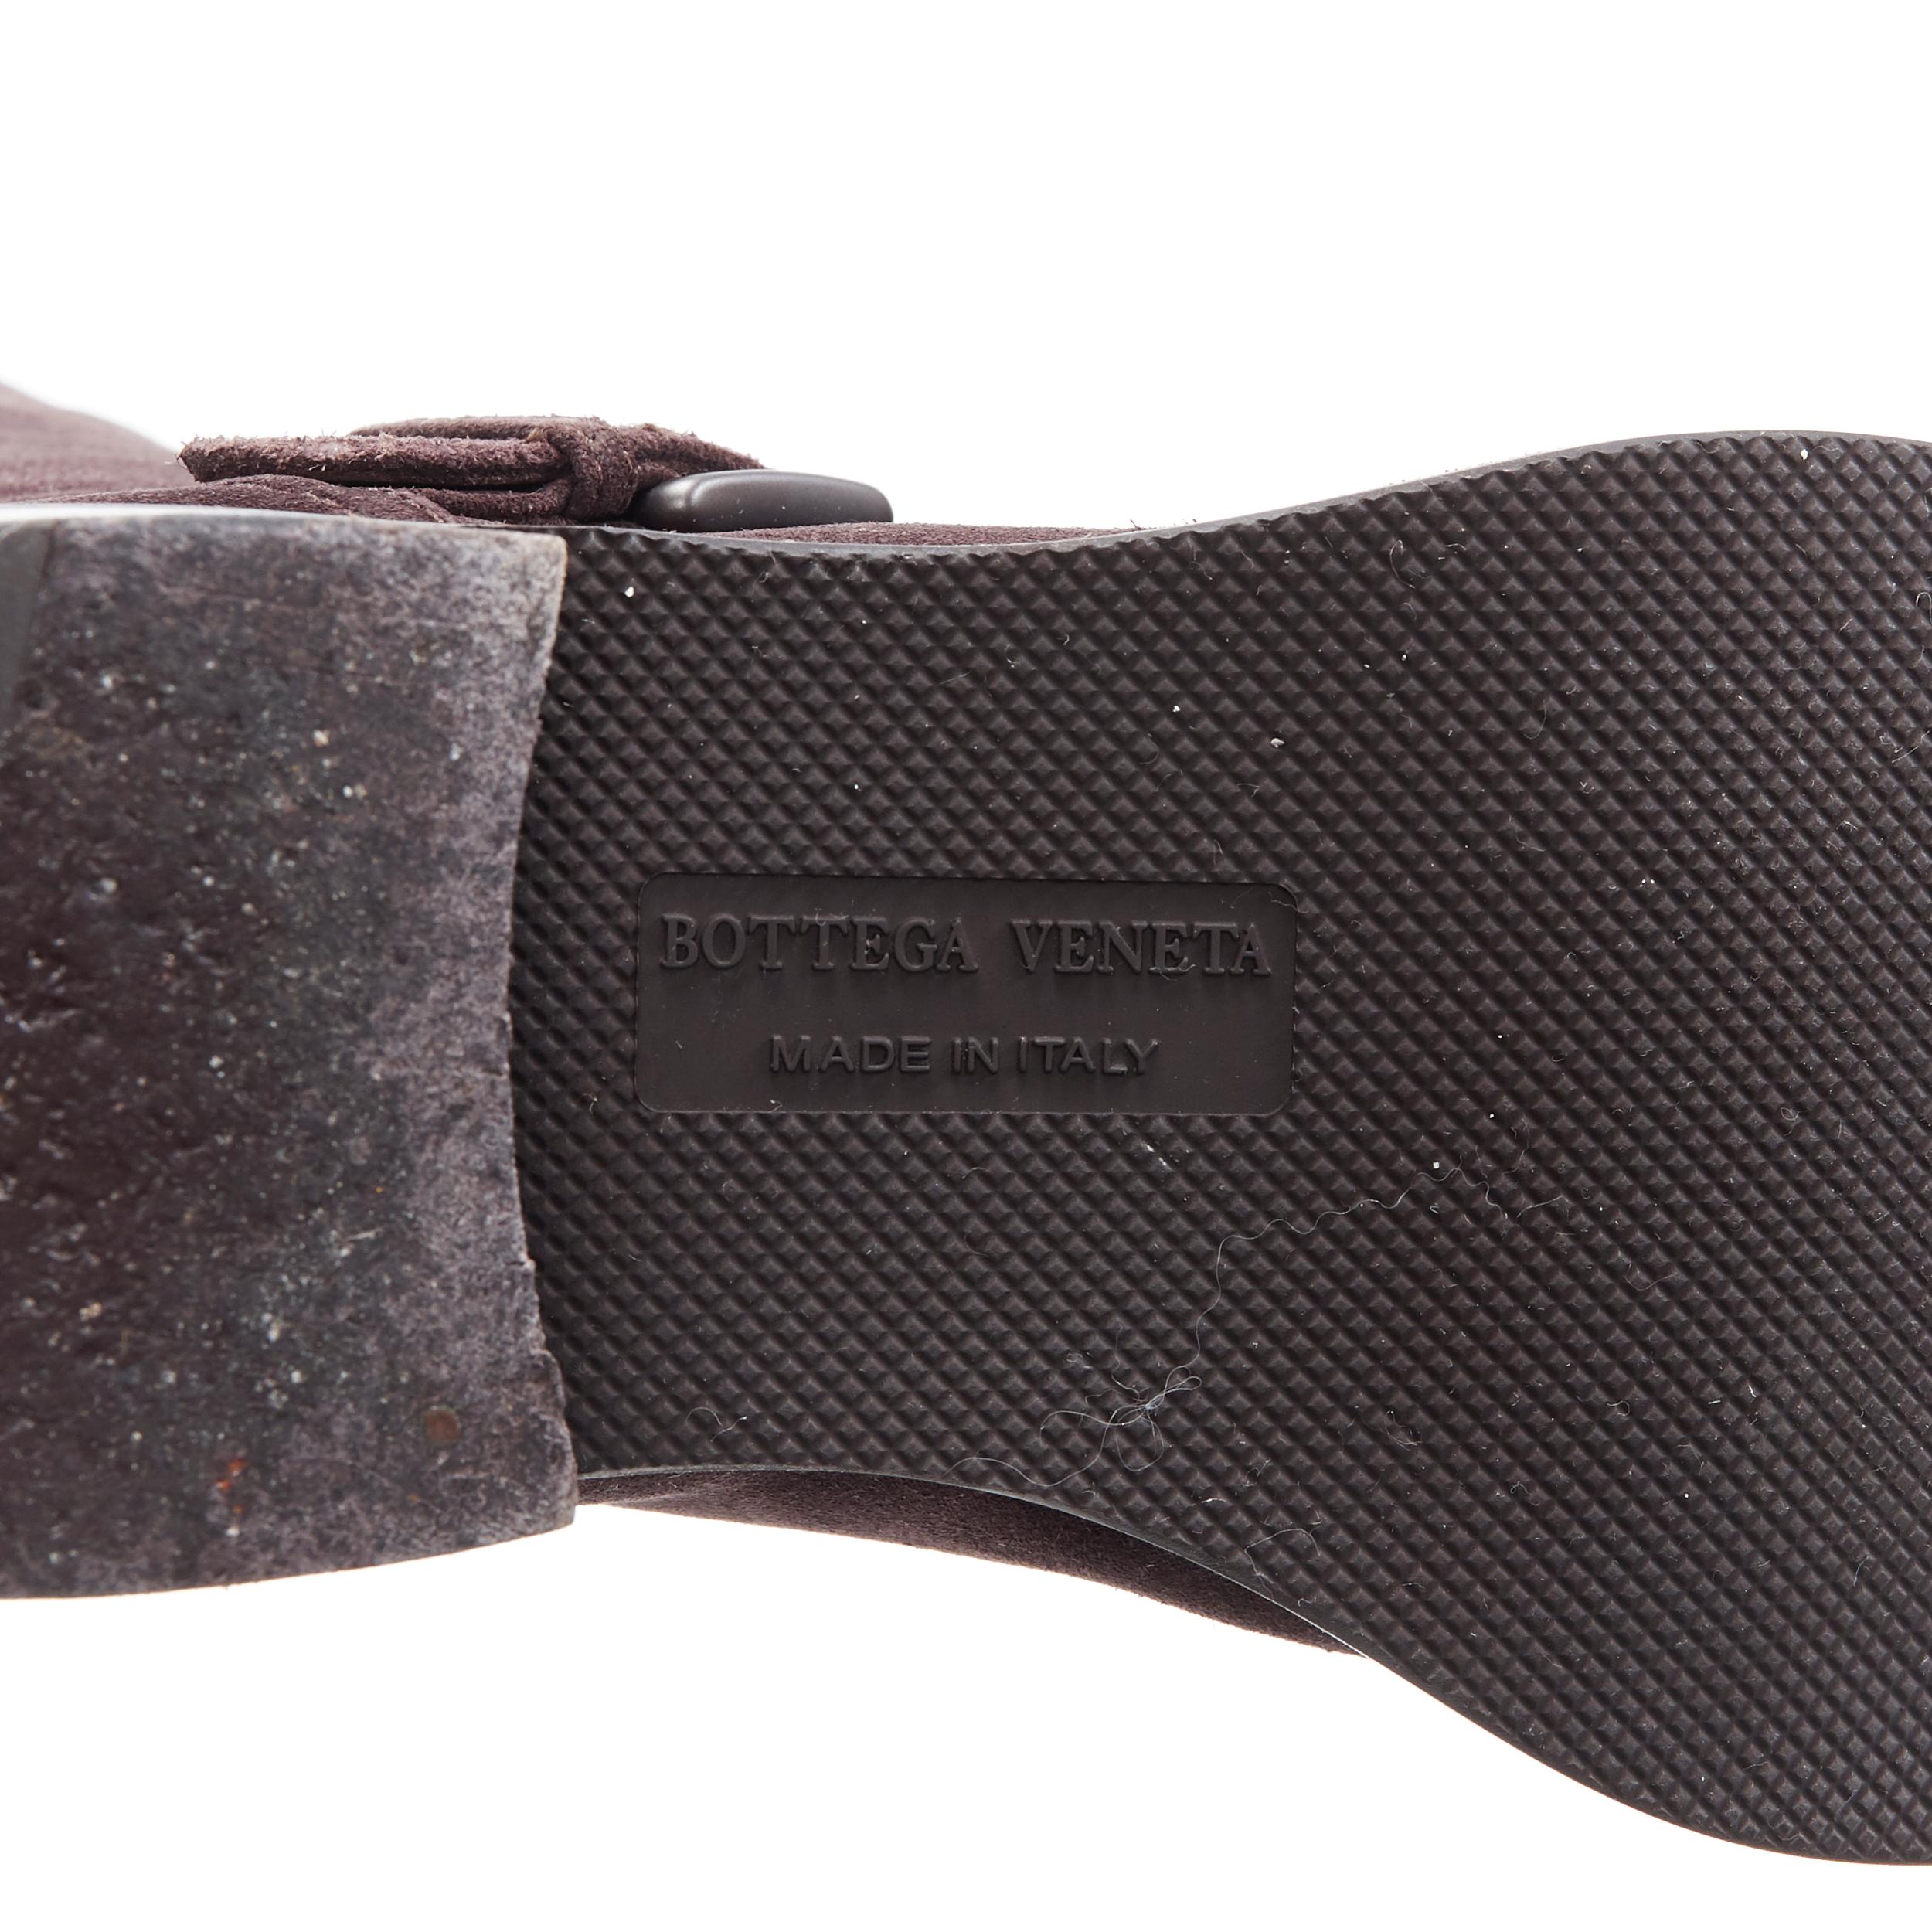 BOTTEGA VENETA dark brown suede leather buckled pull on tall boot EU37.5 4